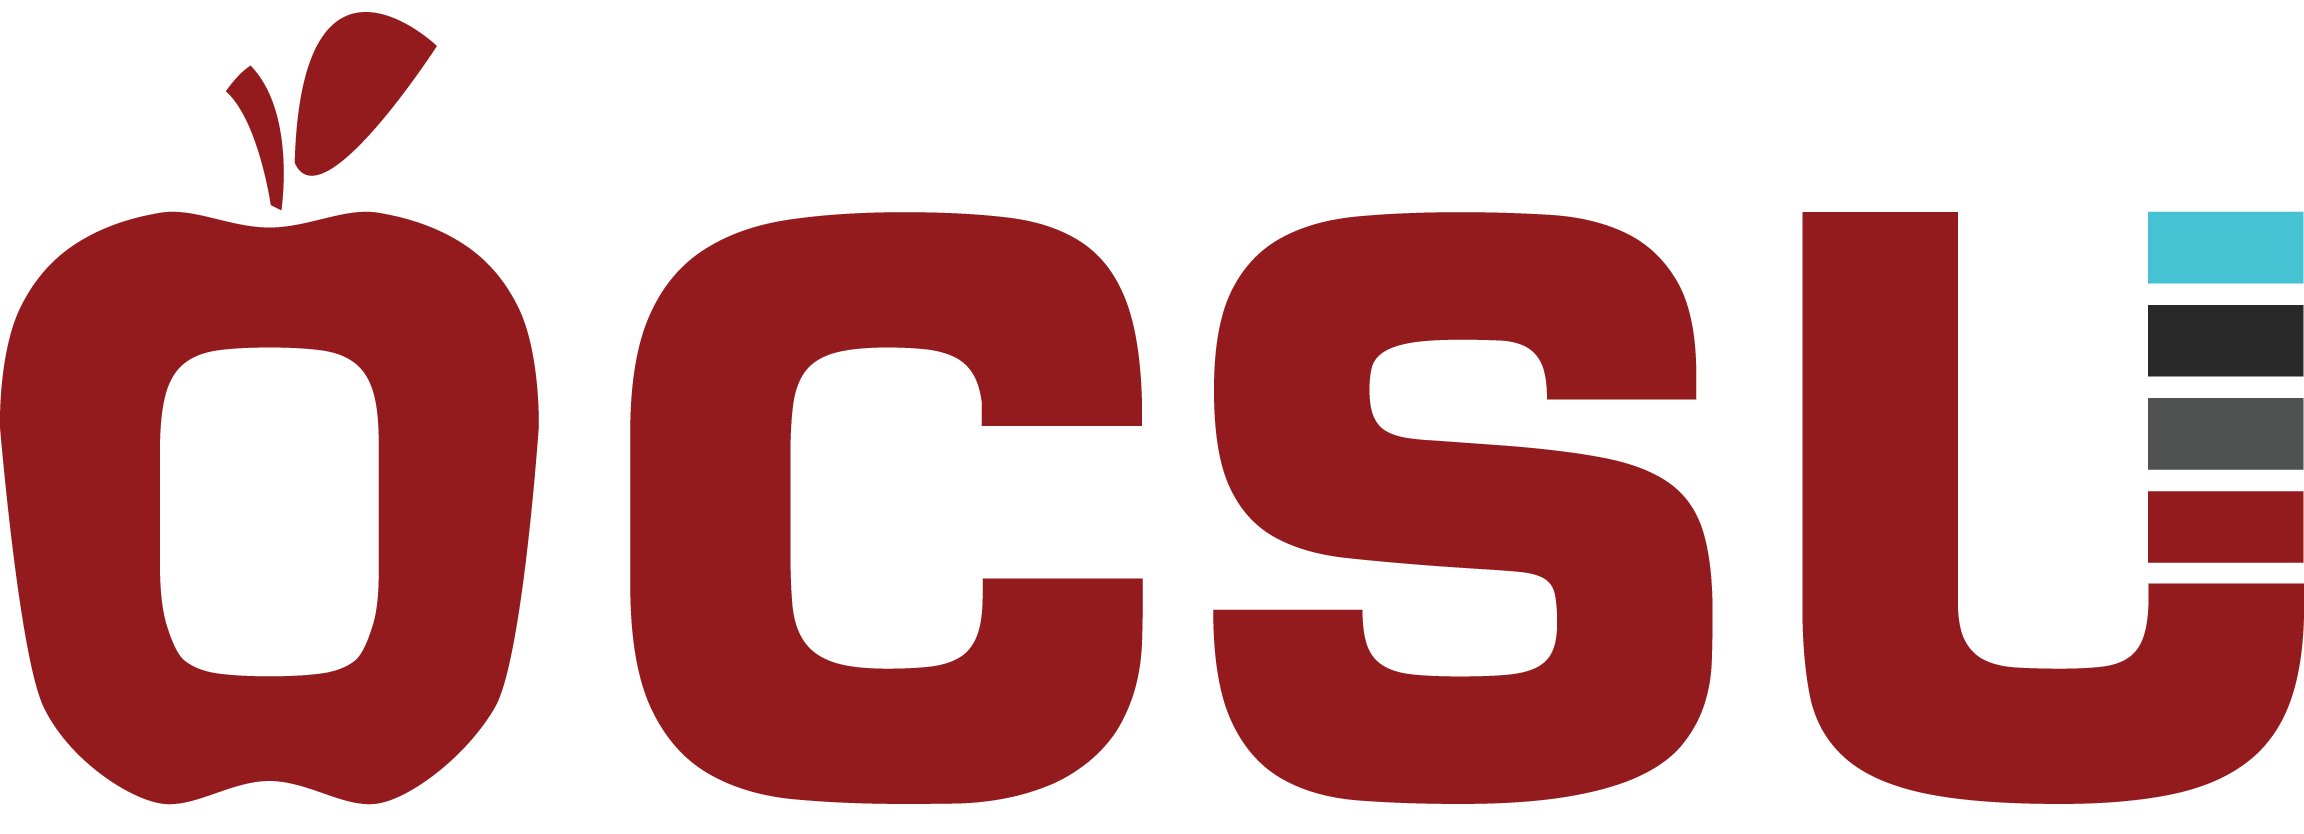 Bcfs Logo - Member Resources